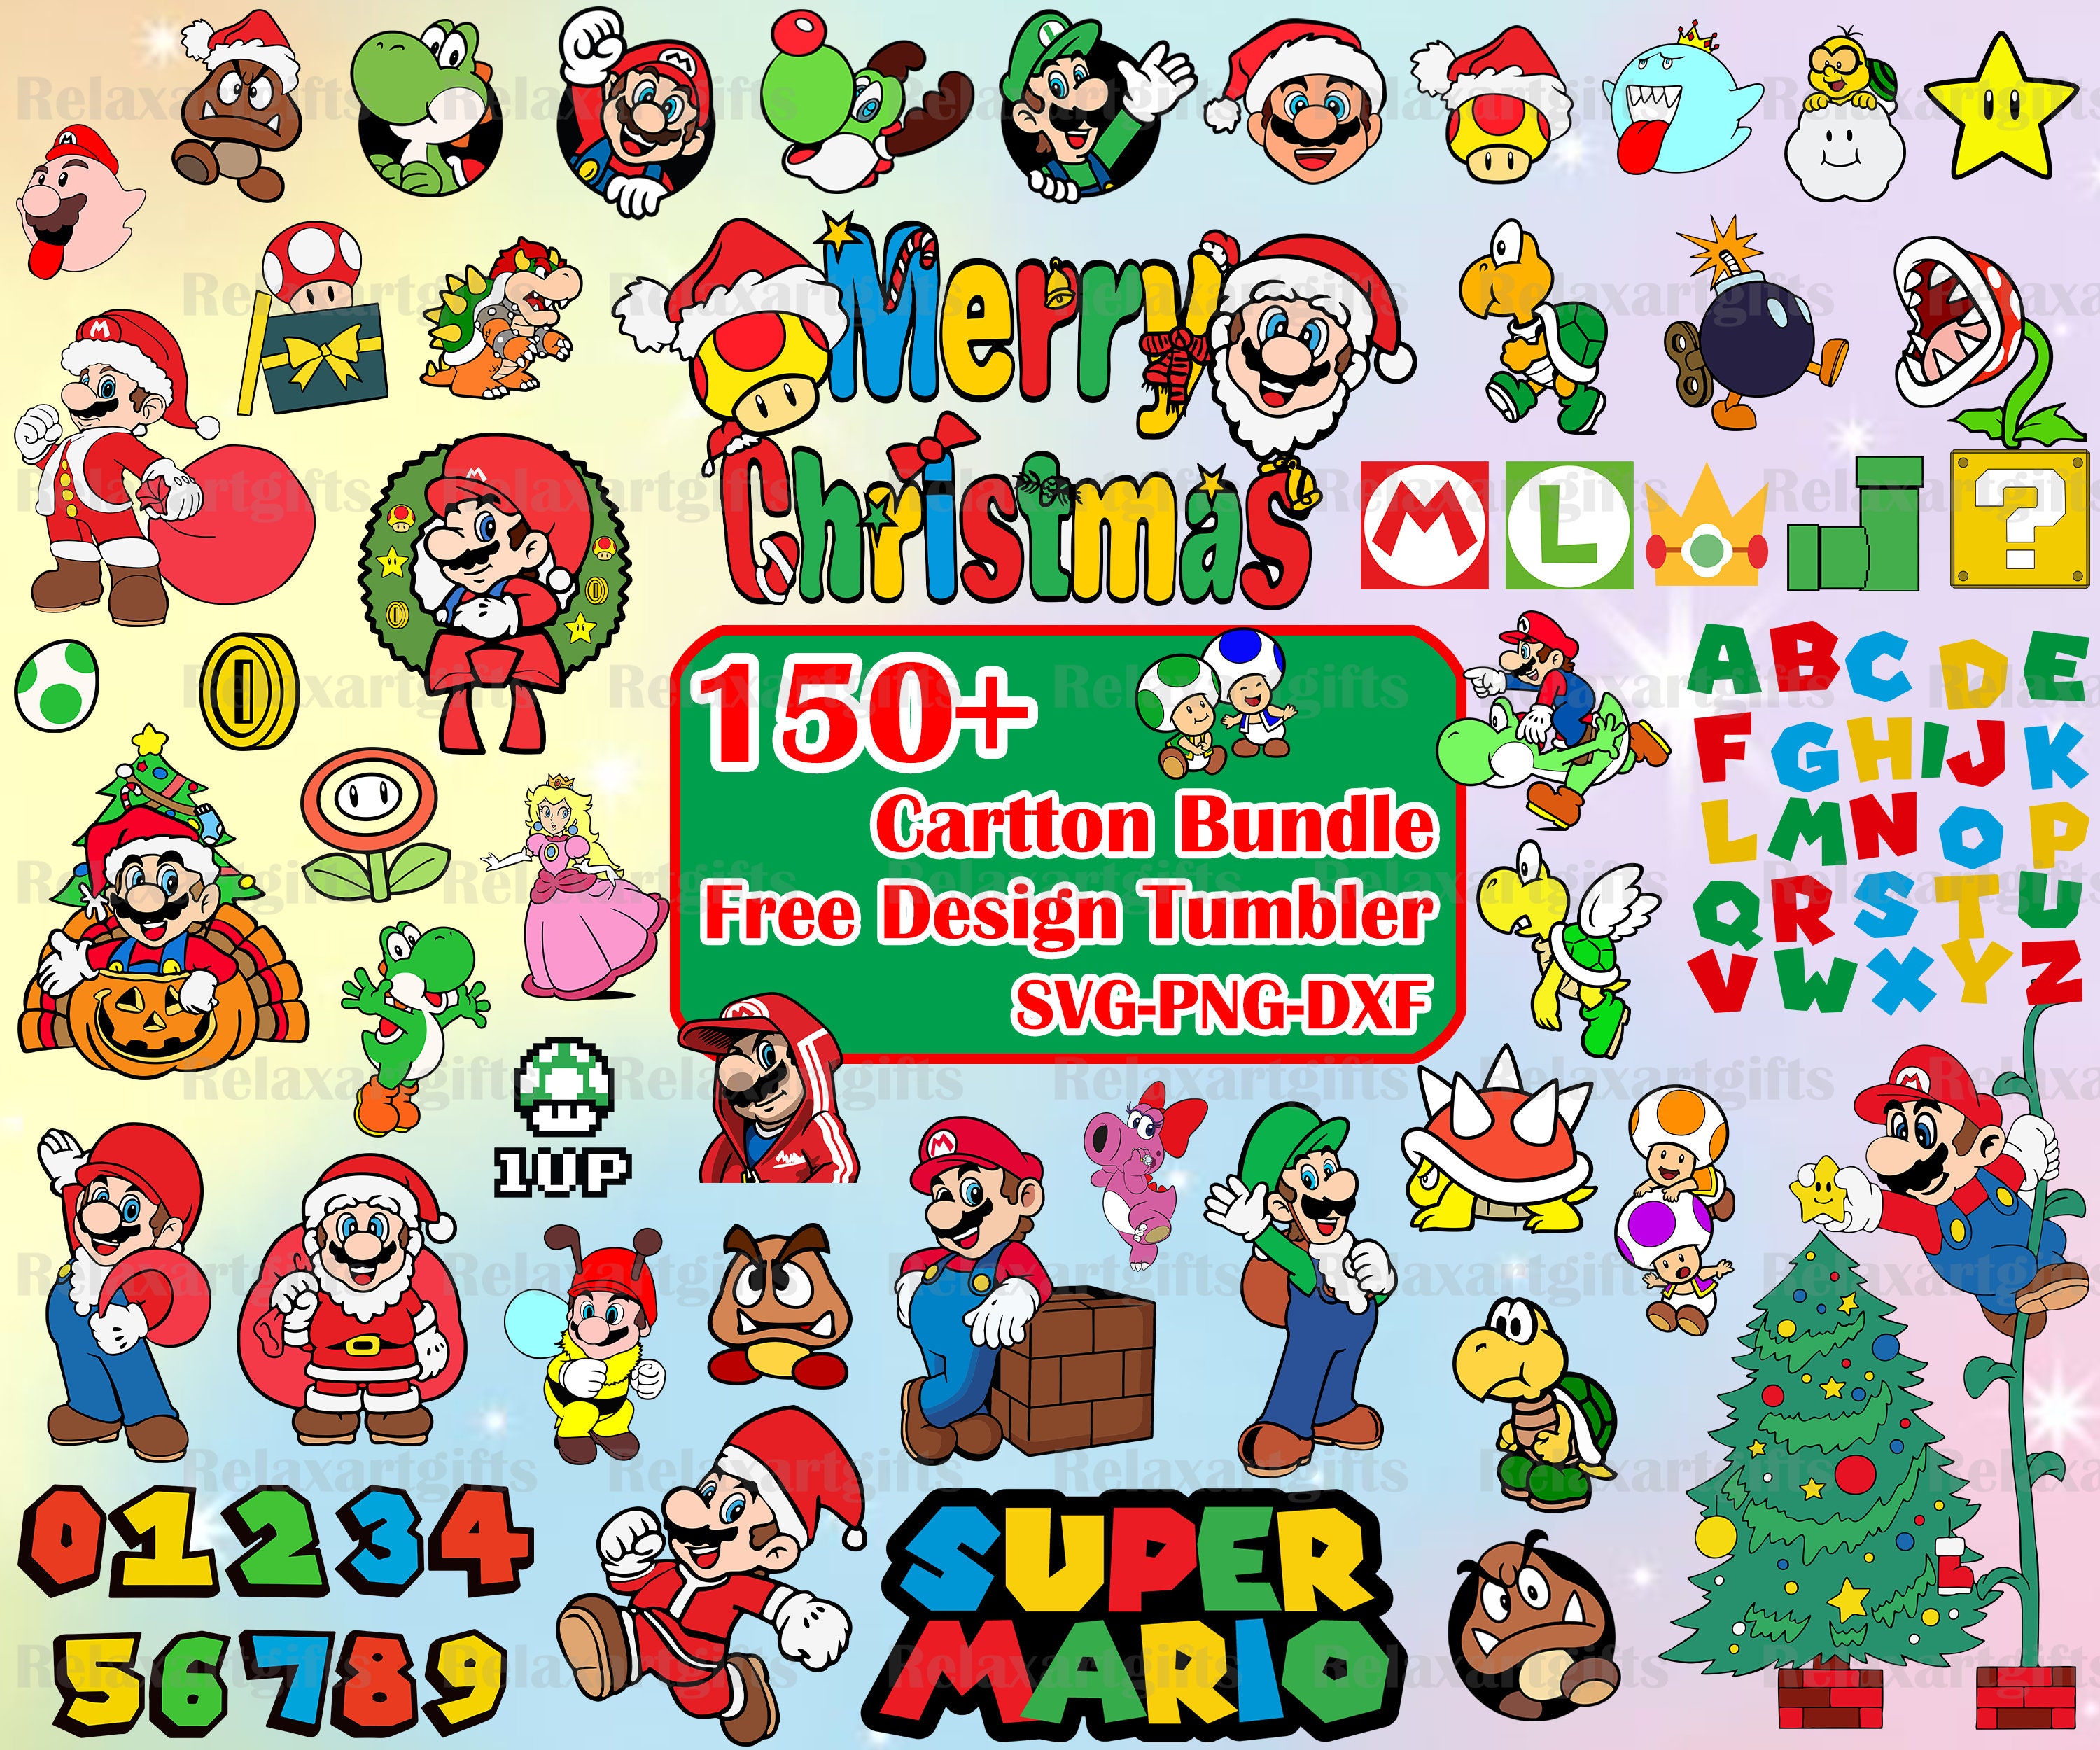 Yoshi Egg Super Mario Brothers Video Game Retro 1.1 Lapel Enamel Pin US  SELLER